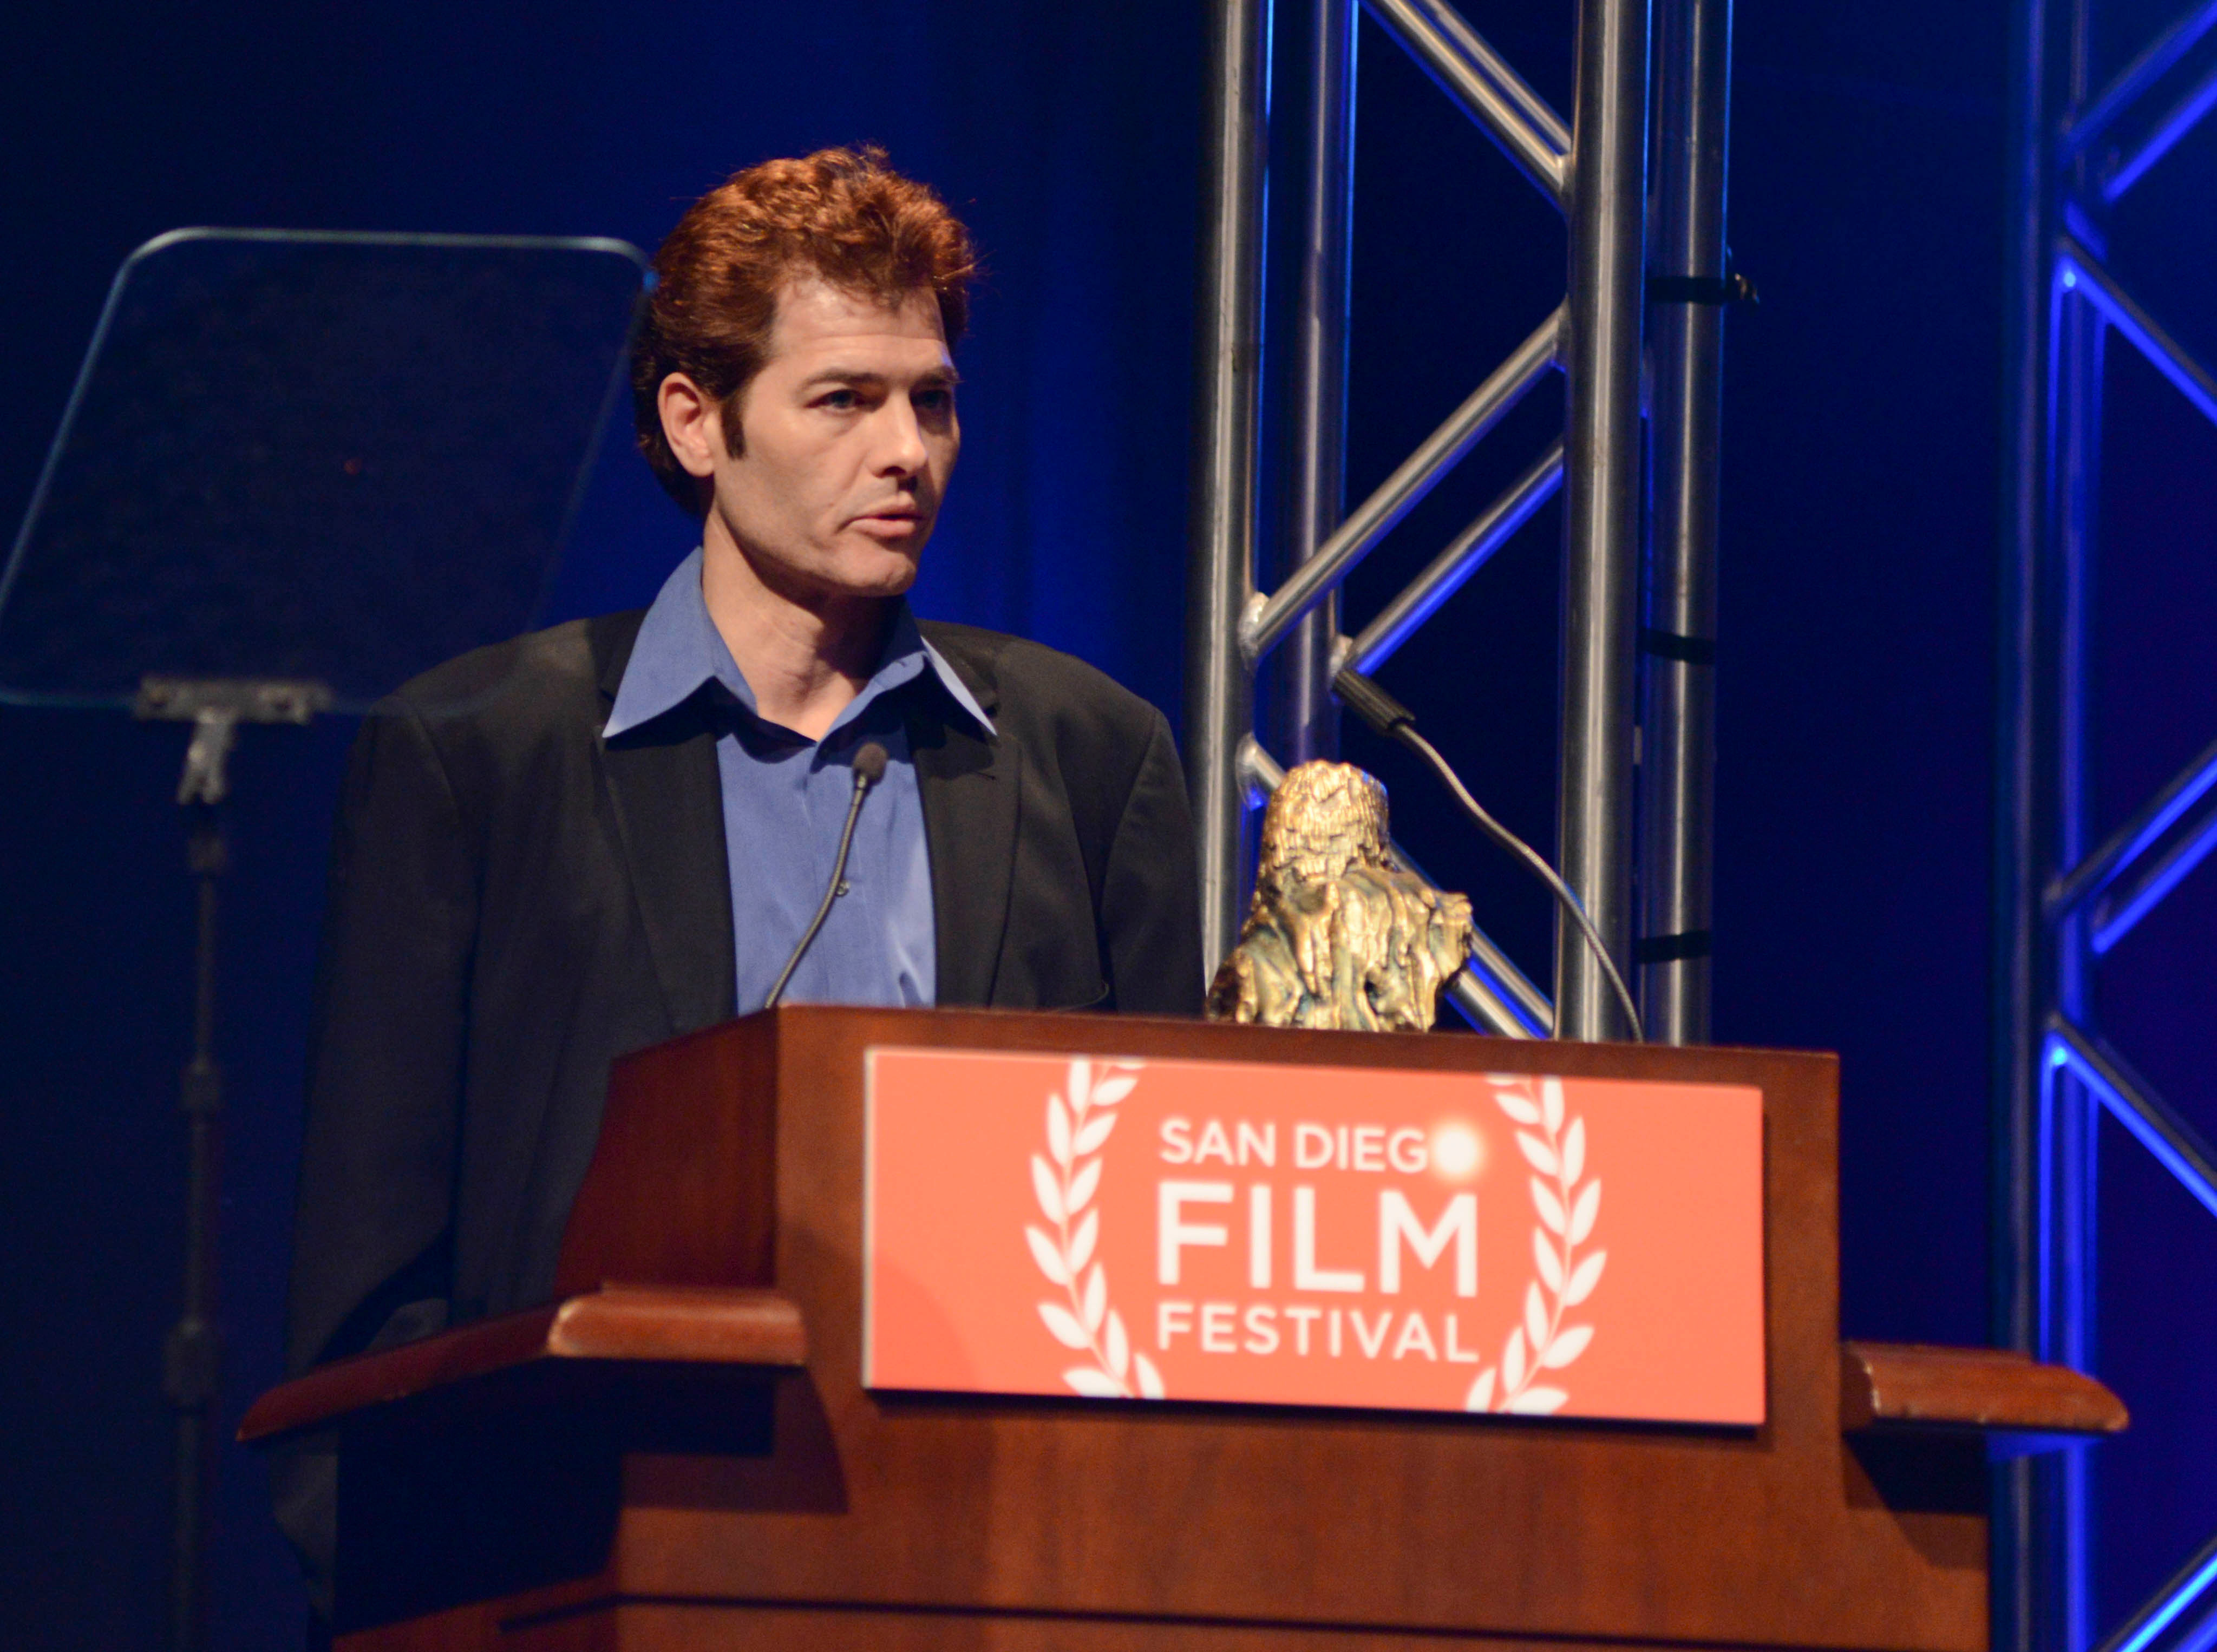 John Beaton Hill receiving The Chris Brinker Award at The San Diego Film Festival for 